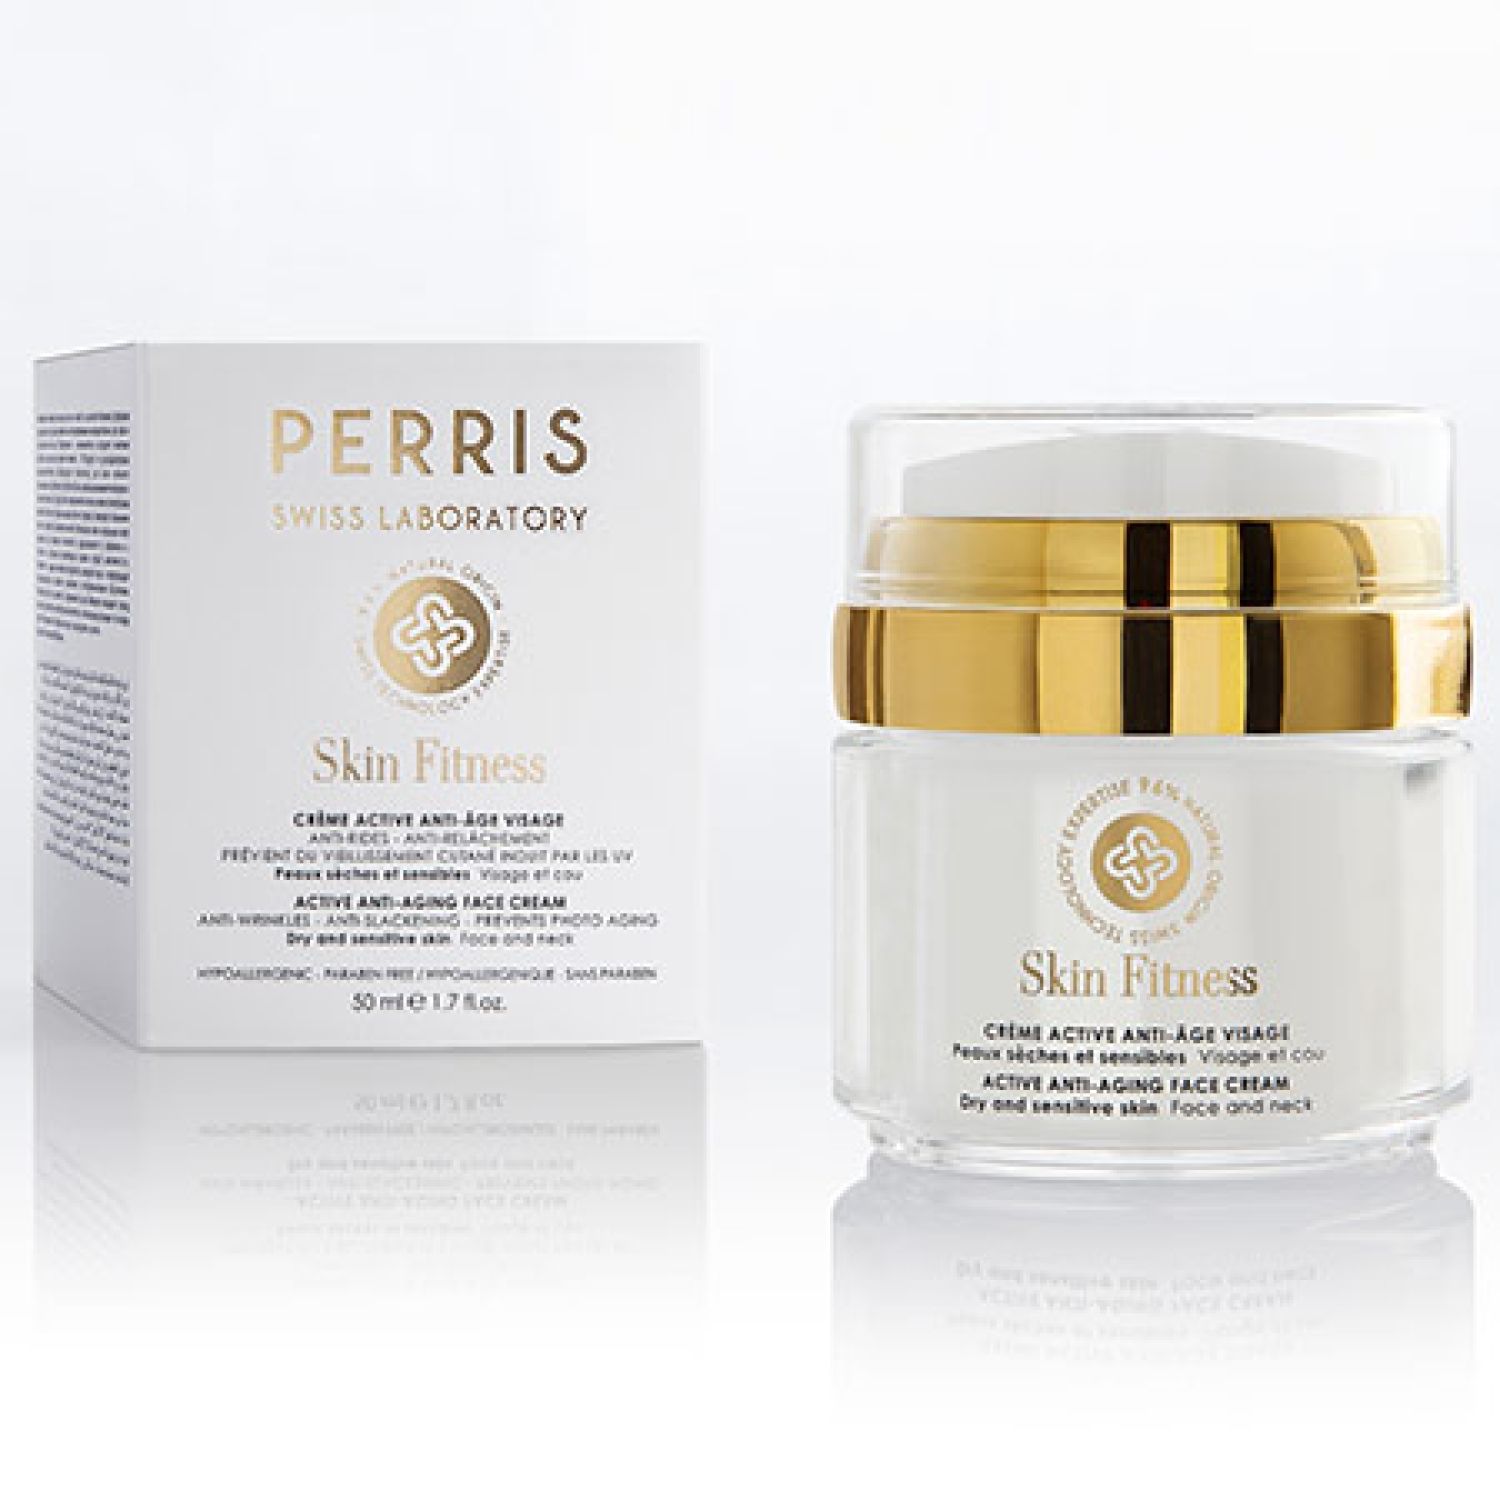 Perris Swiss Laboratory Skin Fitness Skin Fitness Active Anti-Aging Face Cream